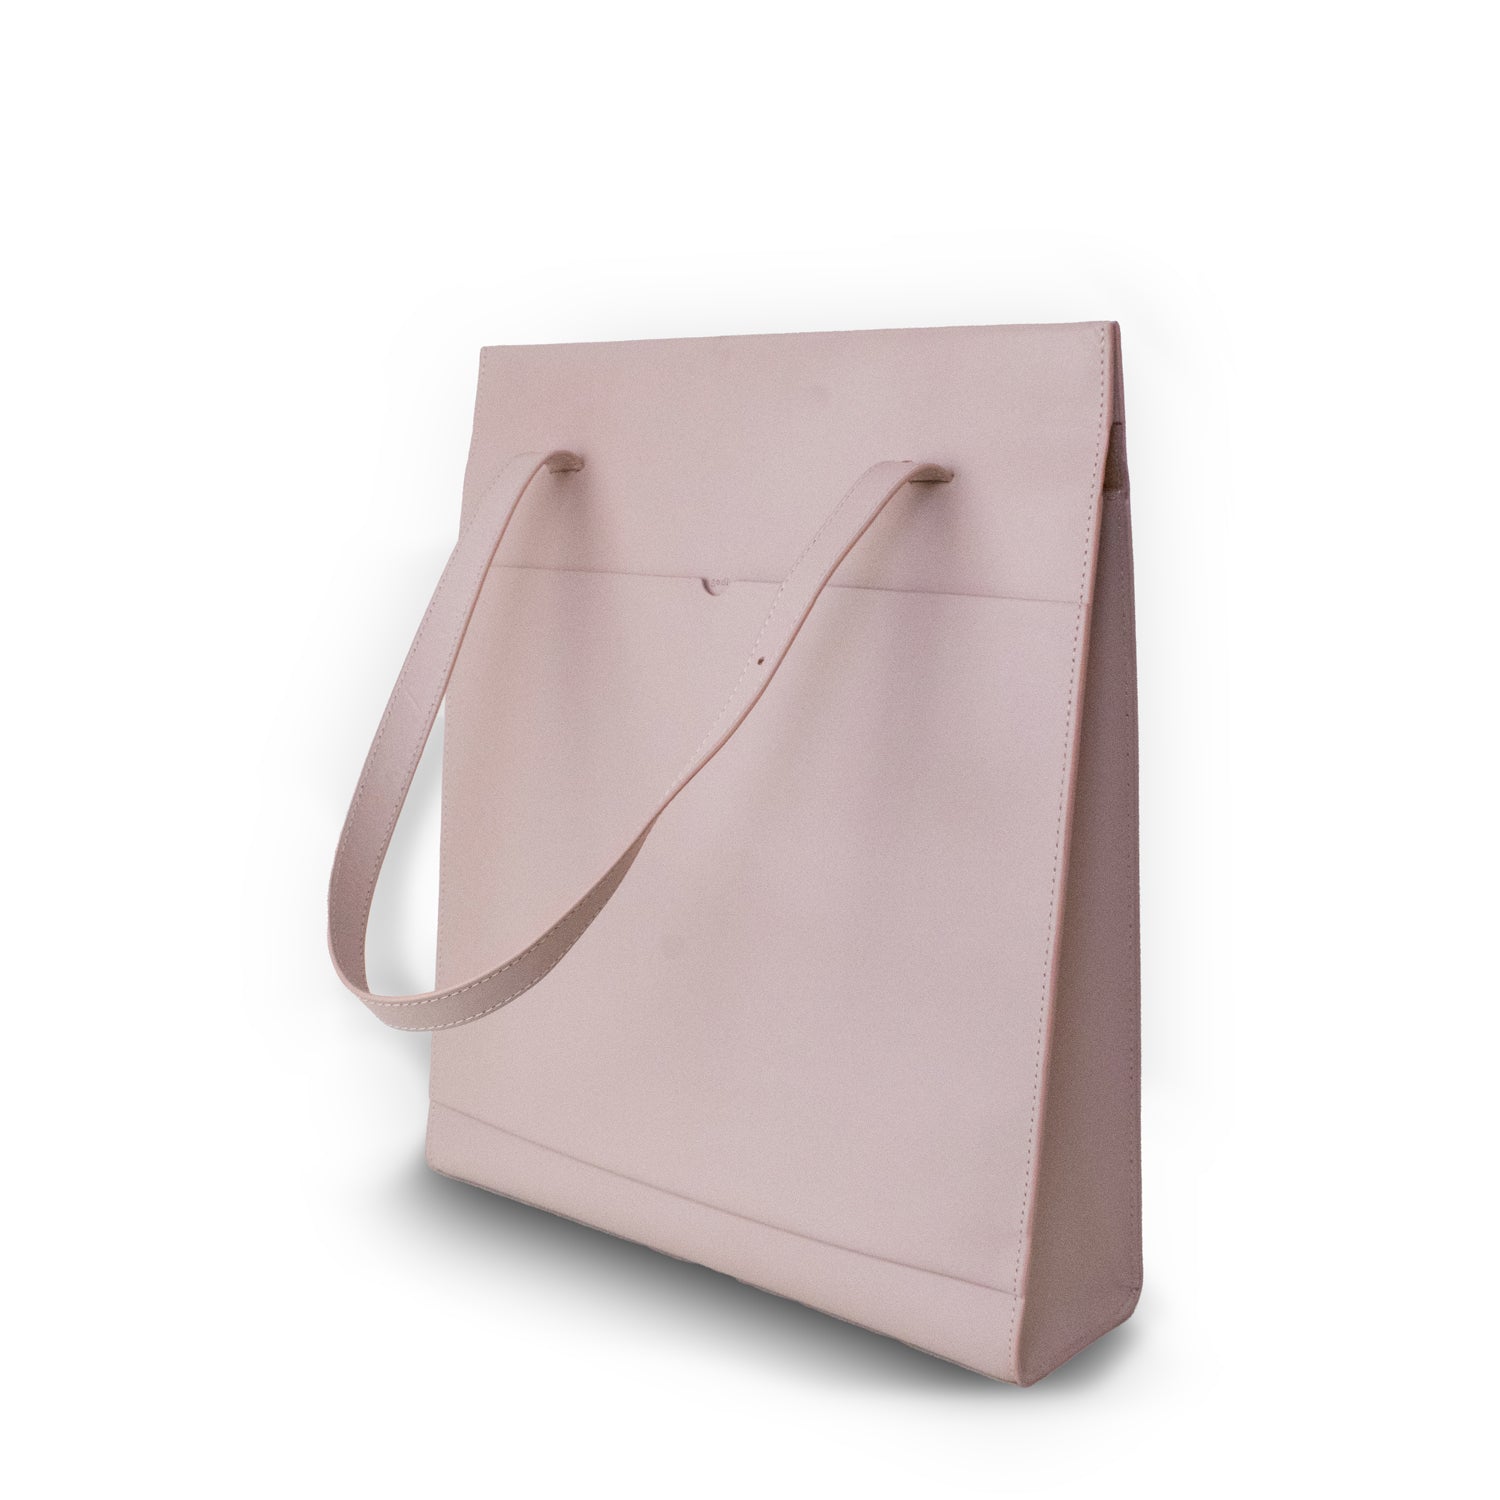 Adjustable Tote Bag in Nude Pink